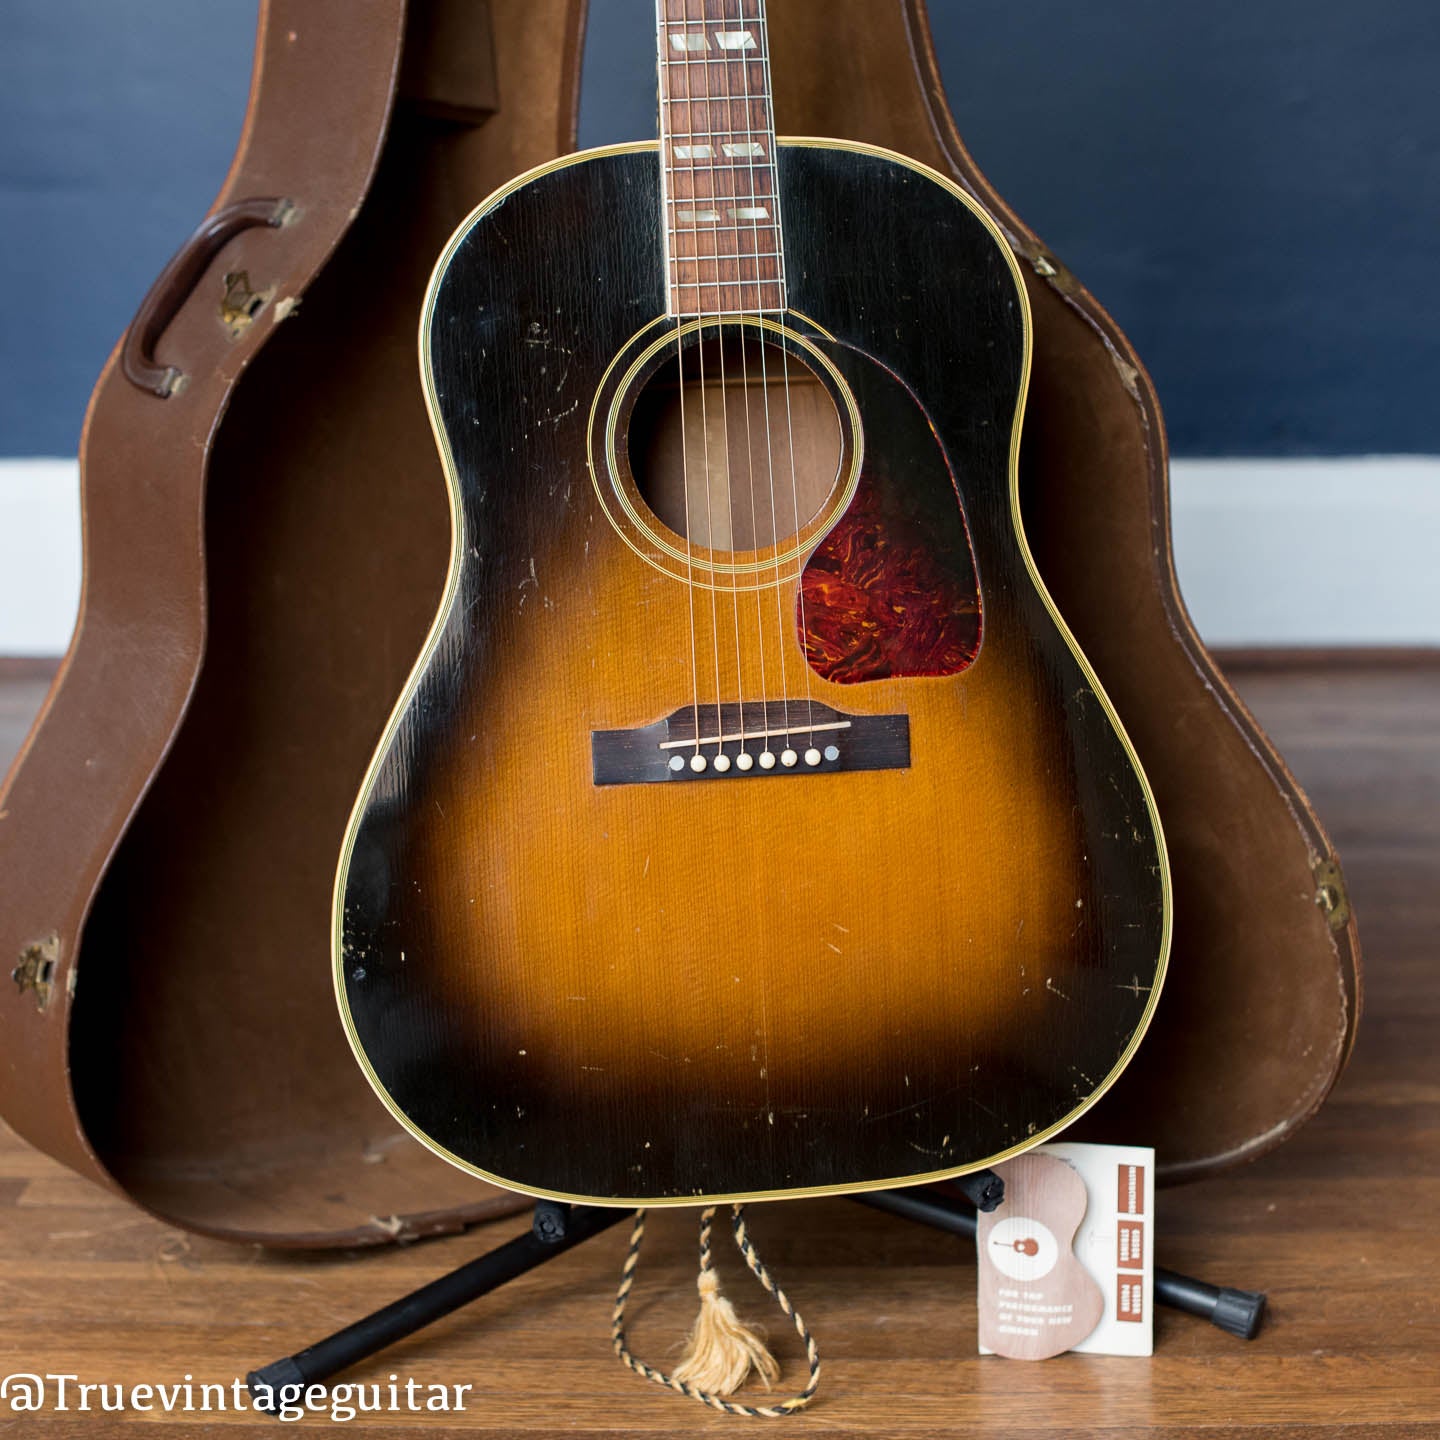 Vintage 1951 Gibson SJ acoustic guitar